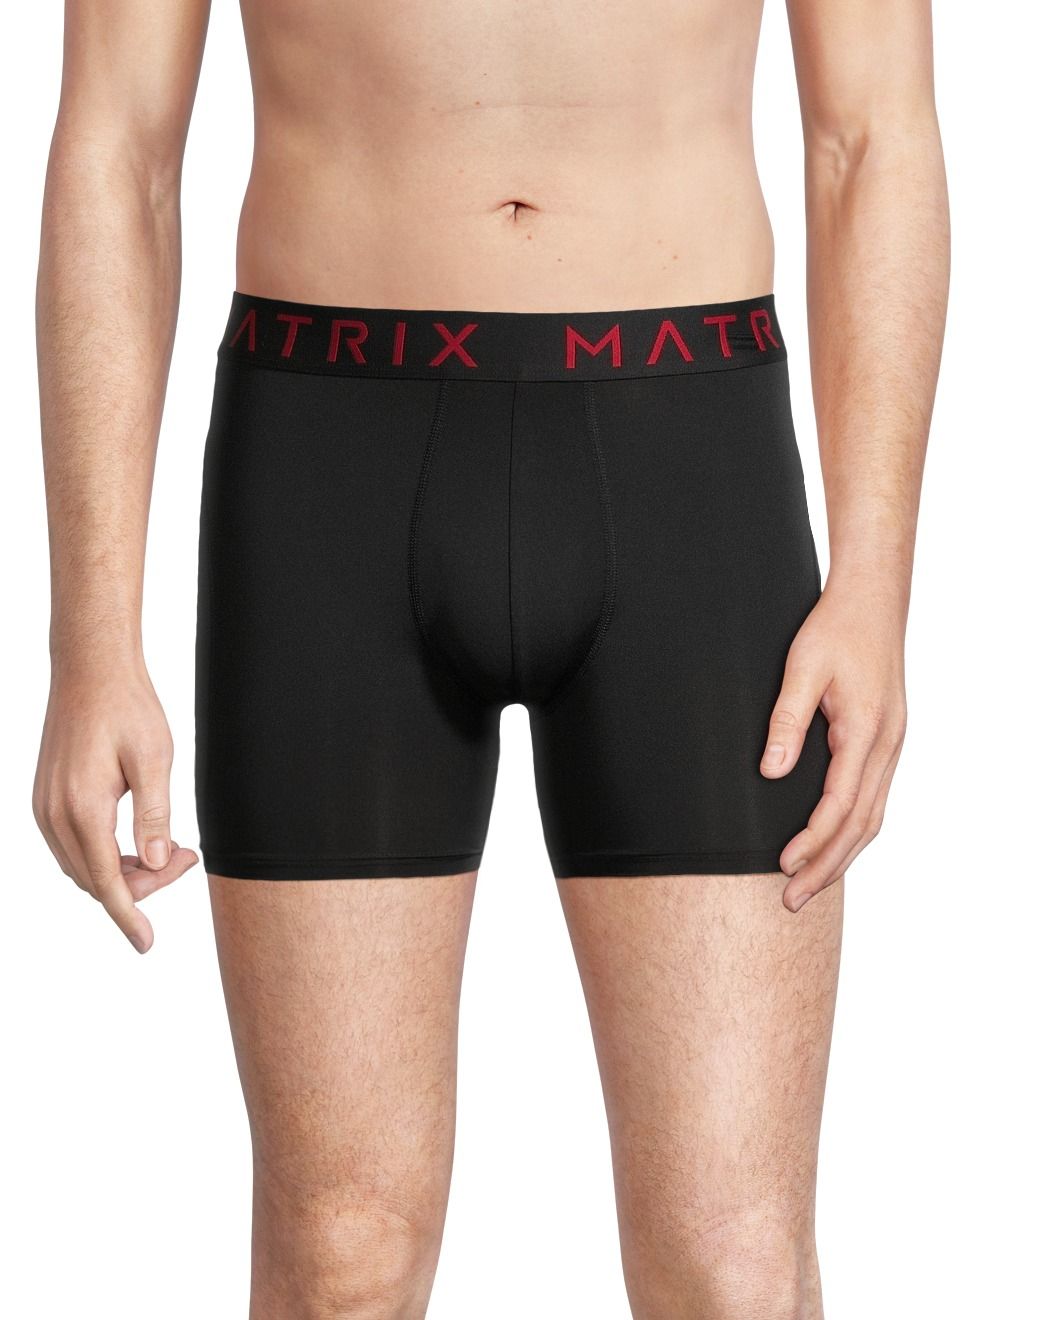 Matrix Men's 2 Pack Microfibre Boxer Briefs Underwear